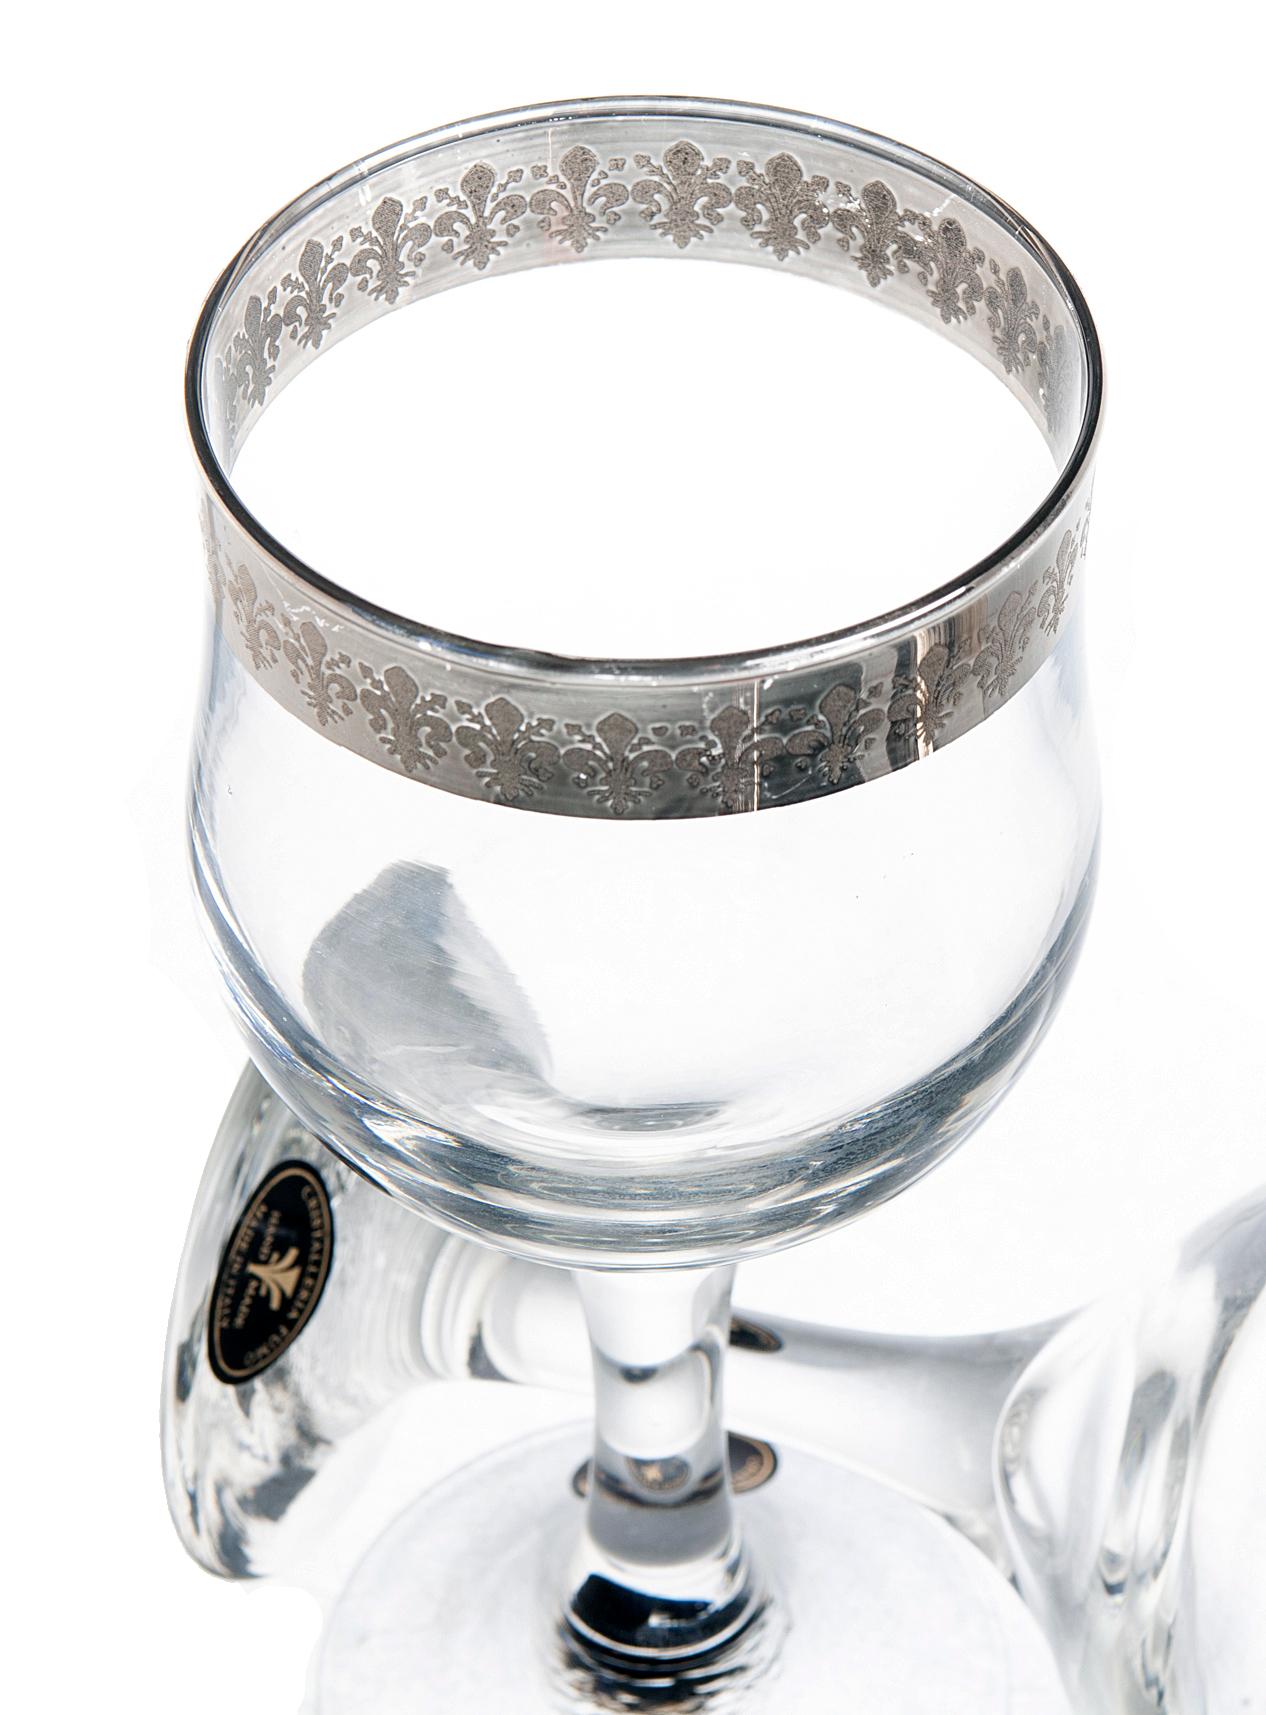 wine glass with silver rim